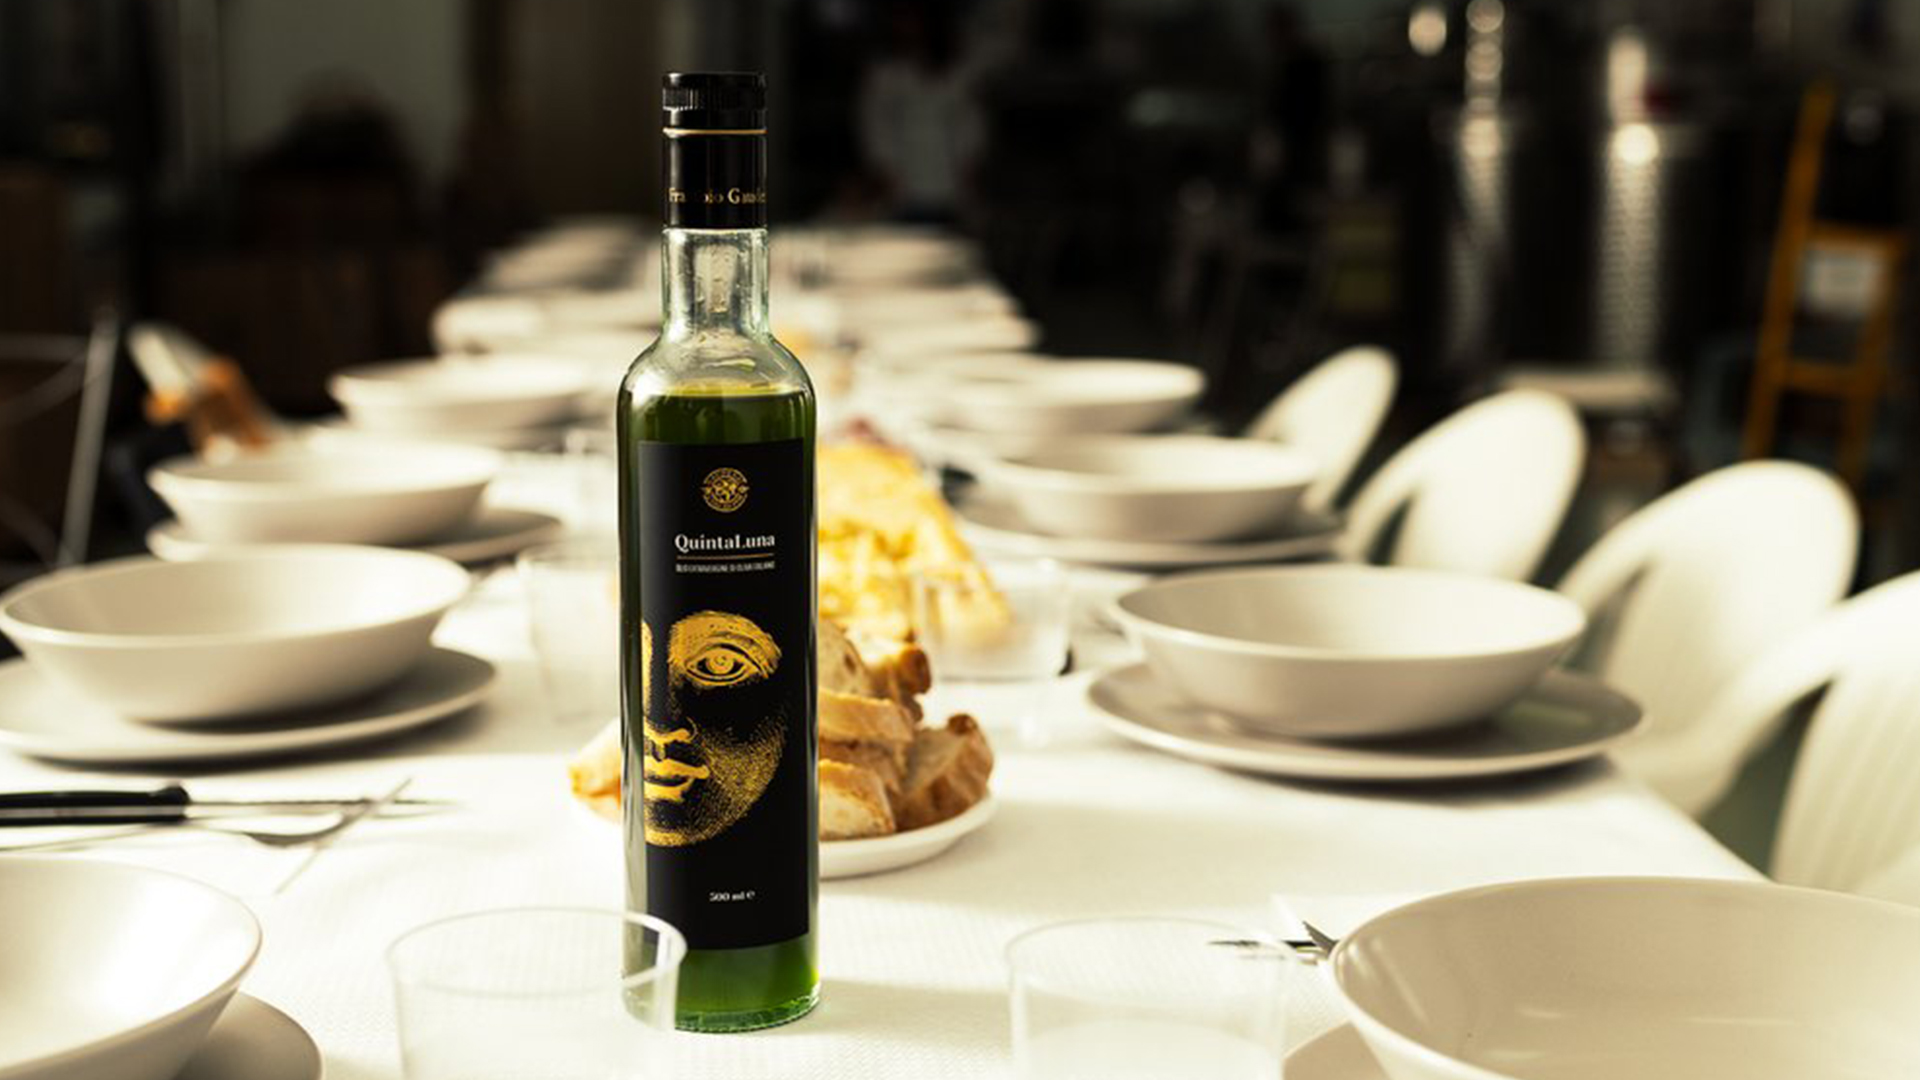 Quinta Luna extra virgin olive oil Frantoio Gaudenzi